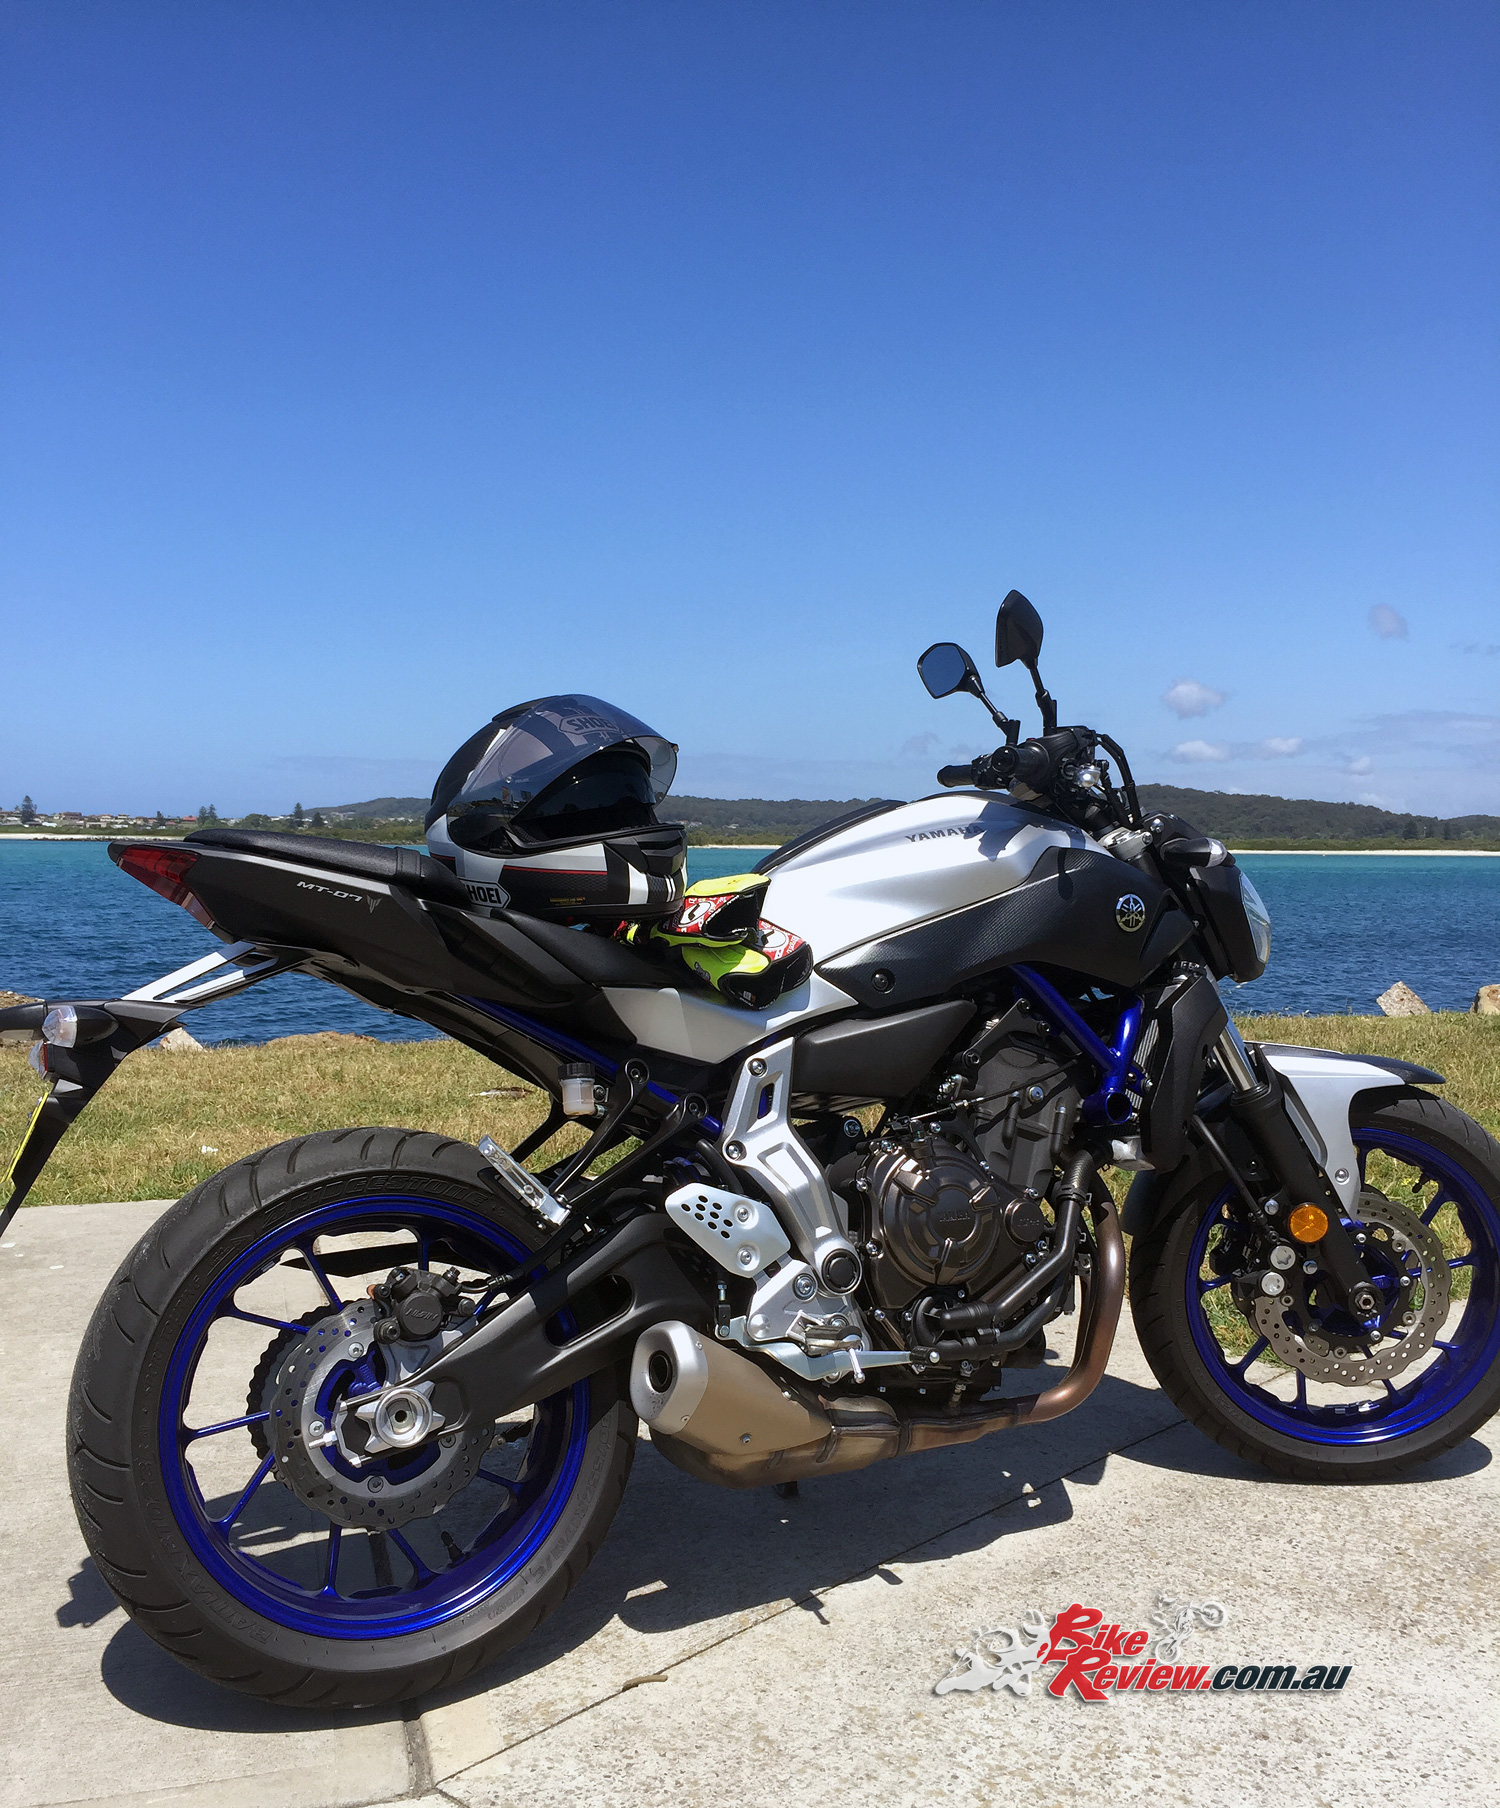 Review: 2016 Yamaha MT-07 HO - Bike Review